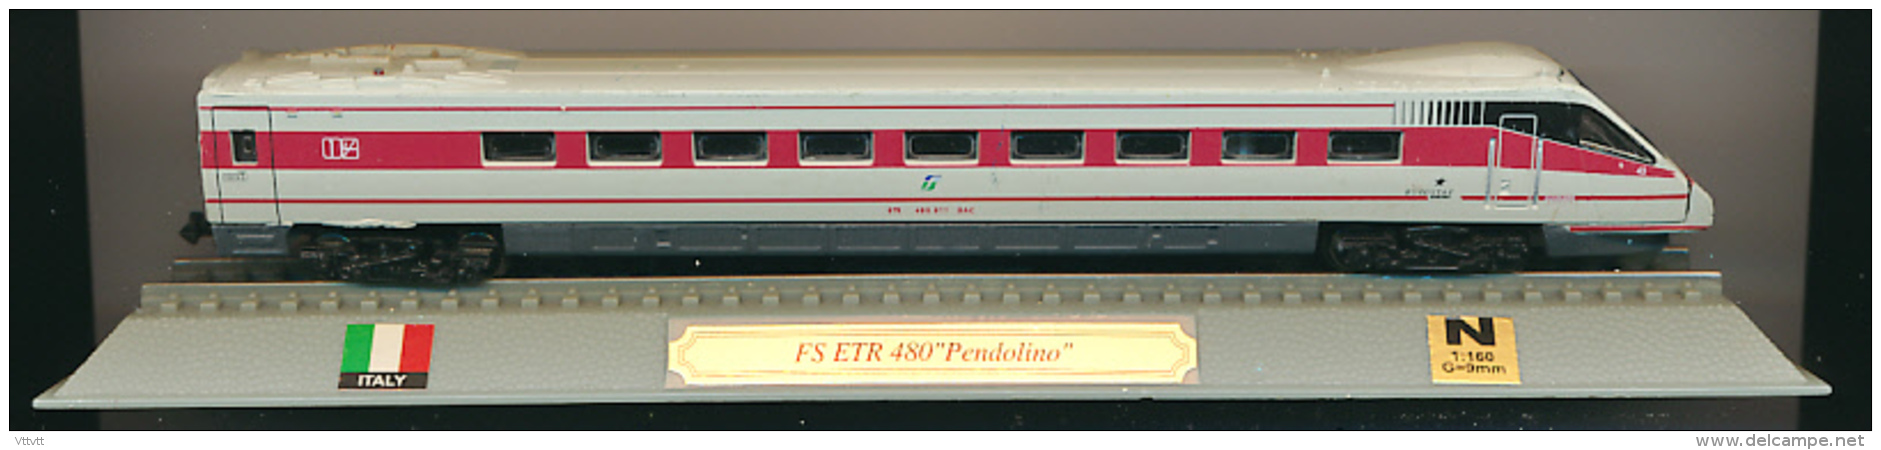 Locomotive : FS ETR 480 "Pendolino", Echelle N 1/160, G = 9 Mm, Italy, Italie - Locomotieven